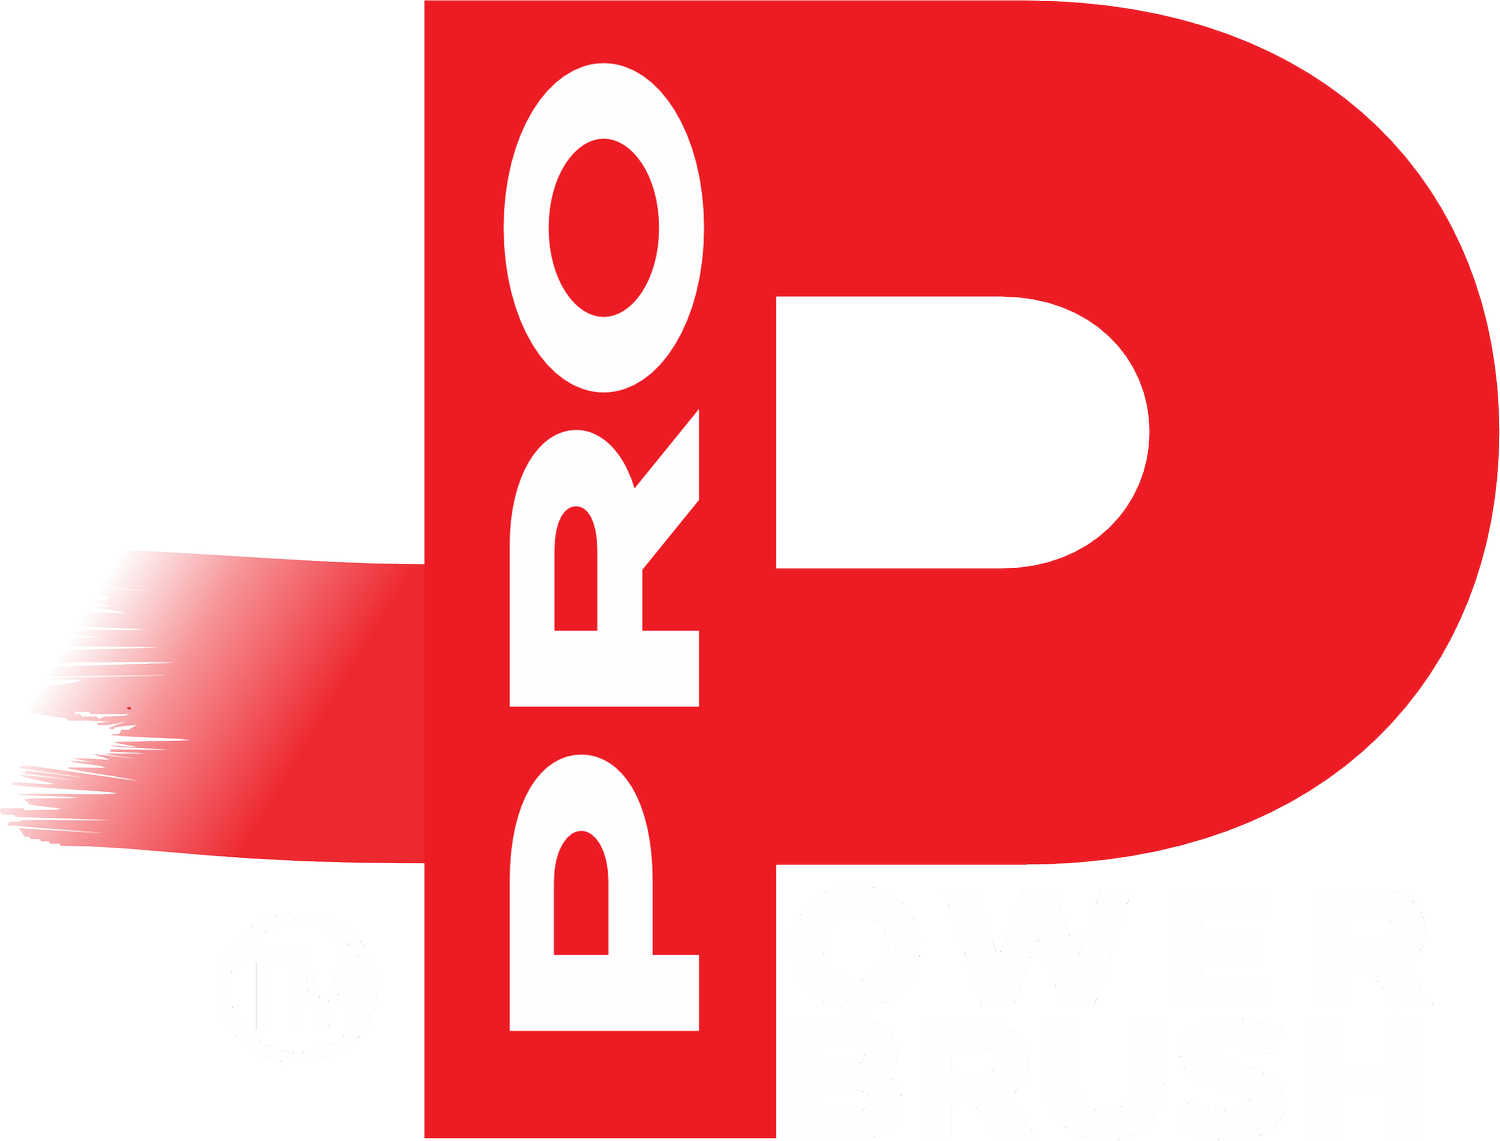 Propower brush